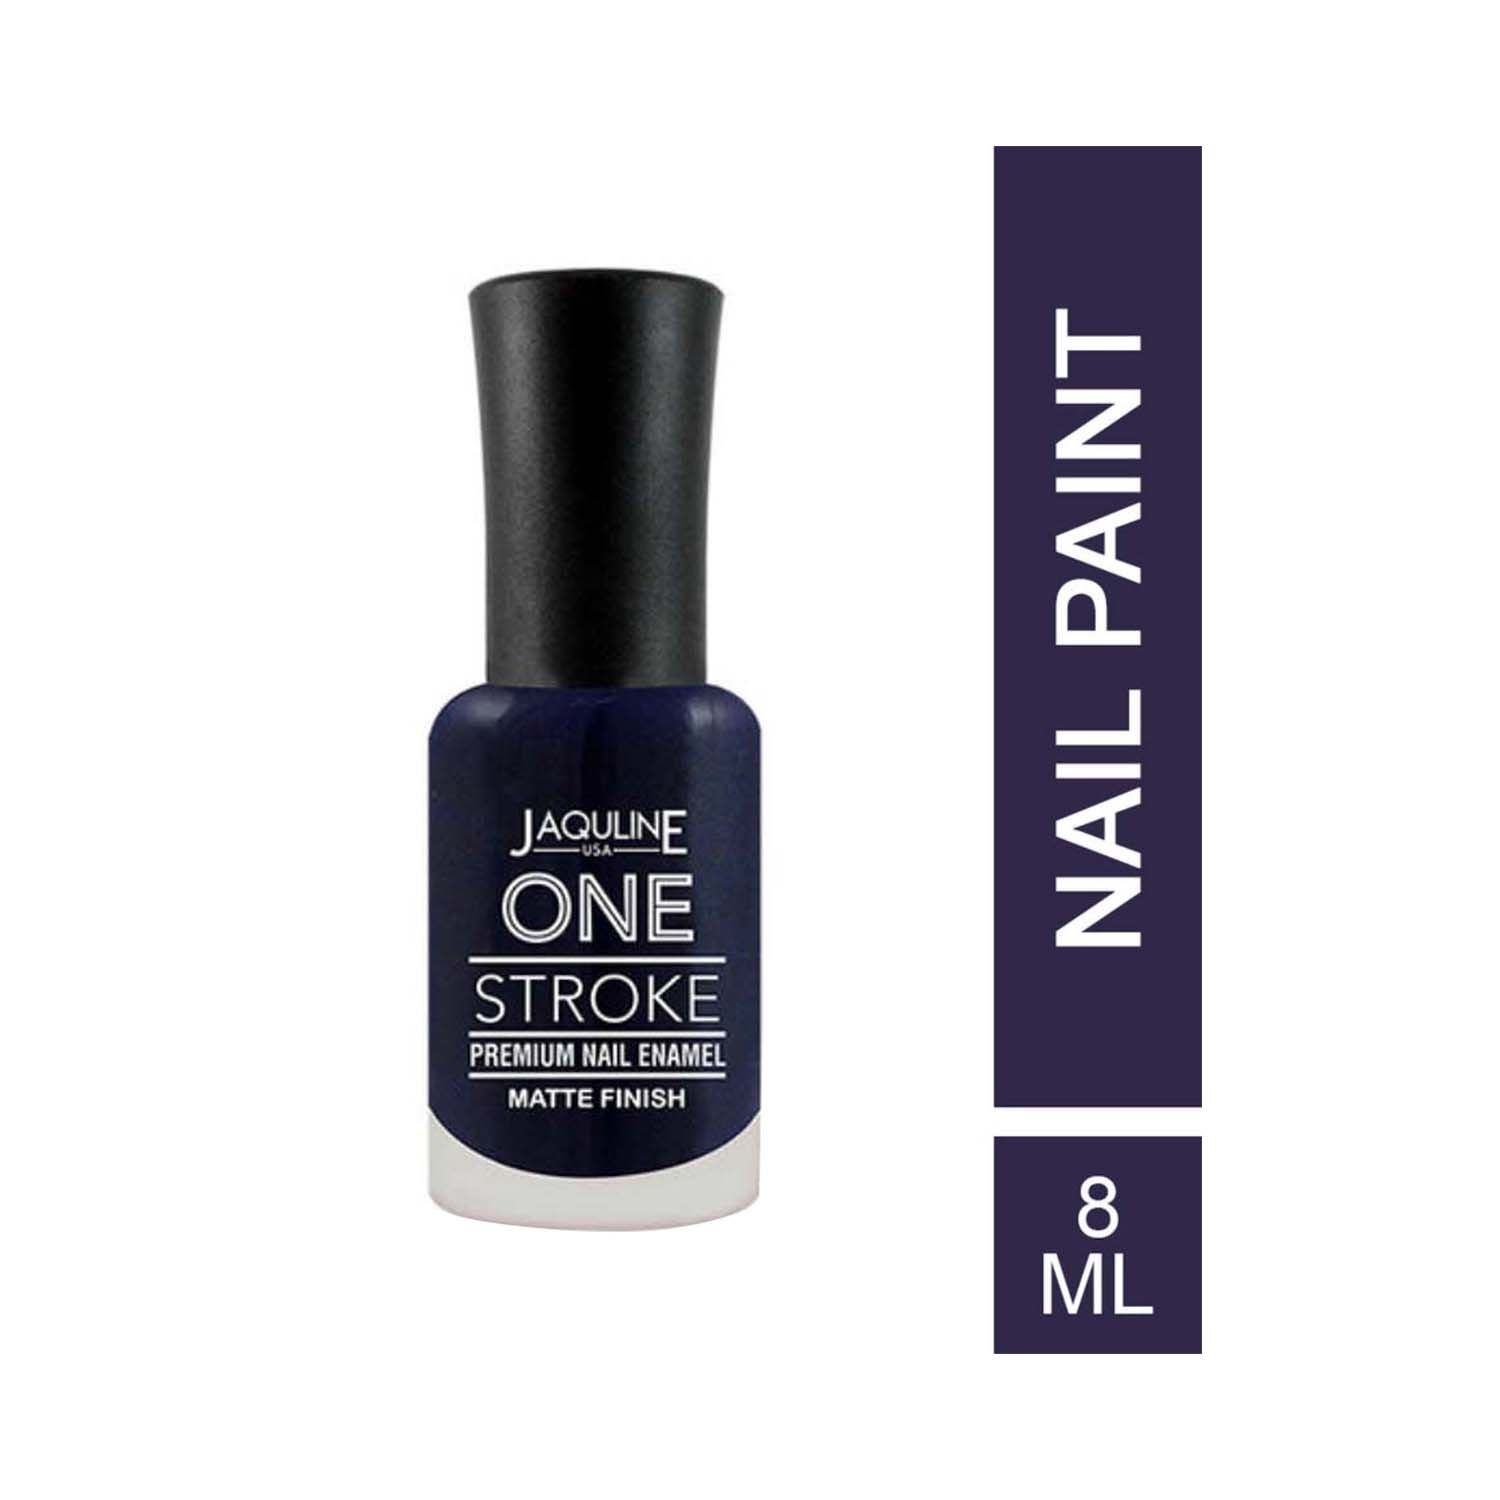 Jaquline USA | Jaquline USA One Stroke Premium Nail Enamel - J24 So Blue (8ml)